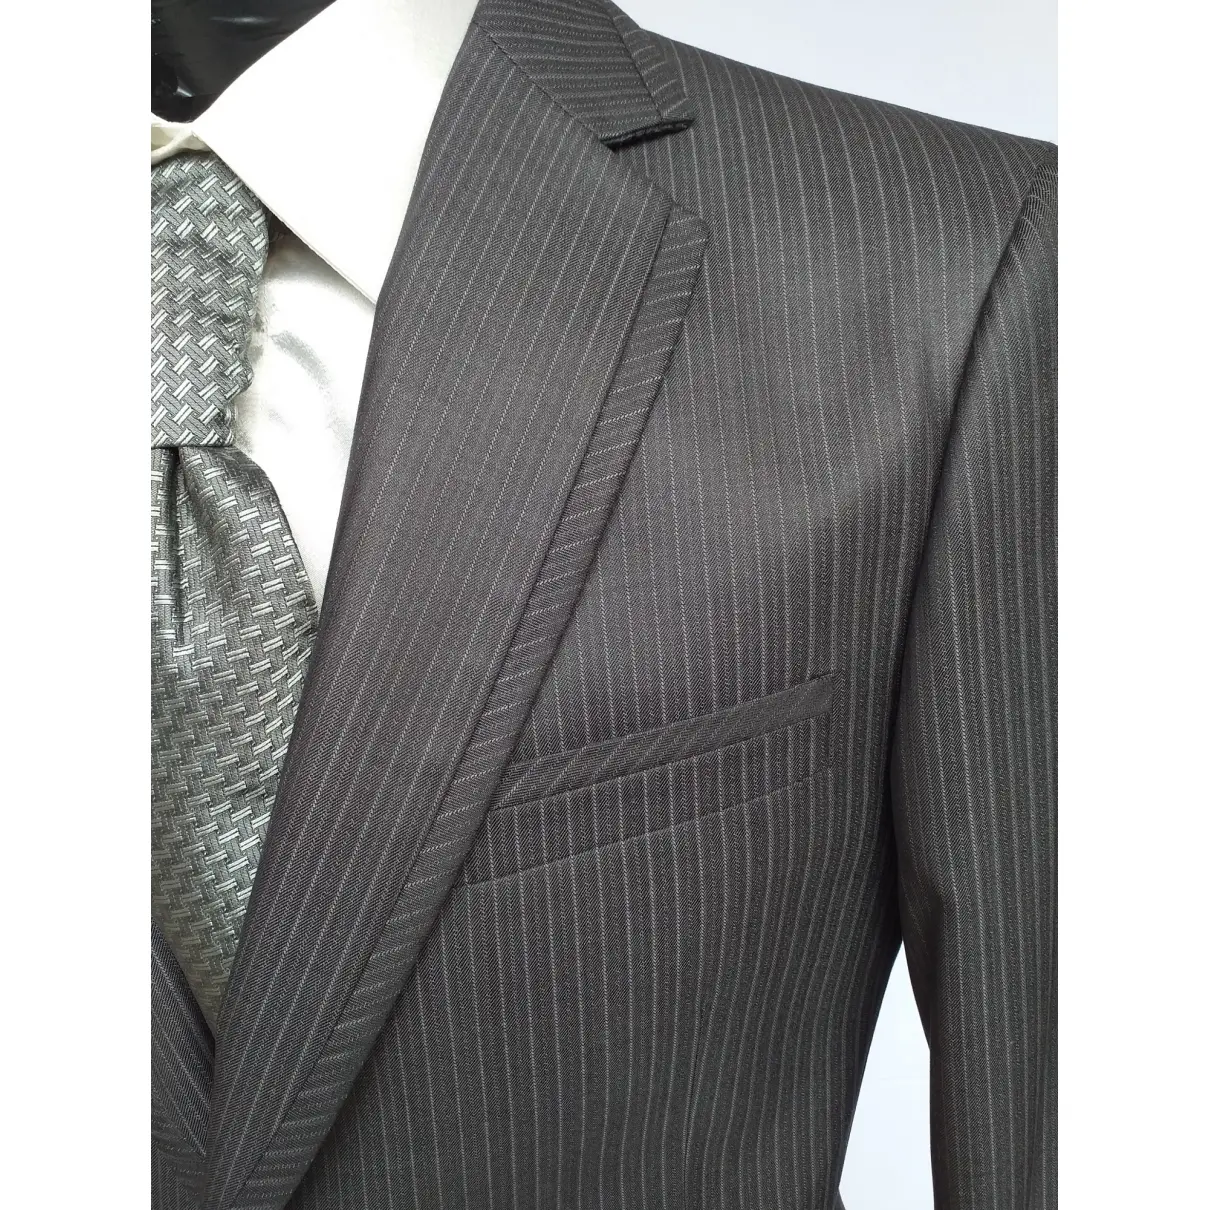 Wool suit Pierre Cardin - Vintage